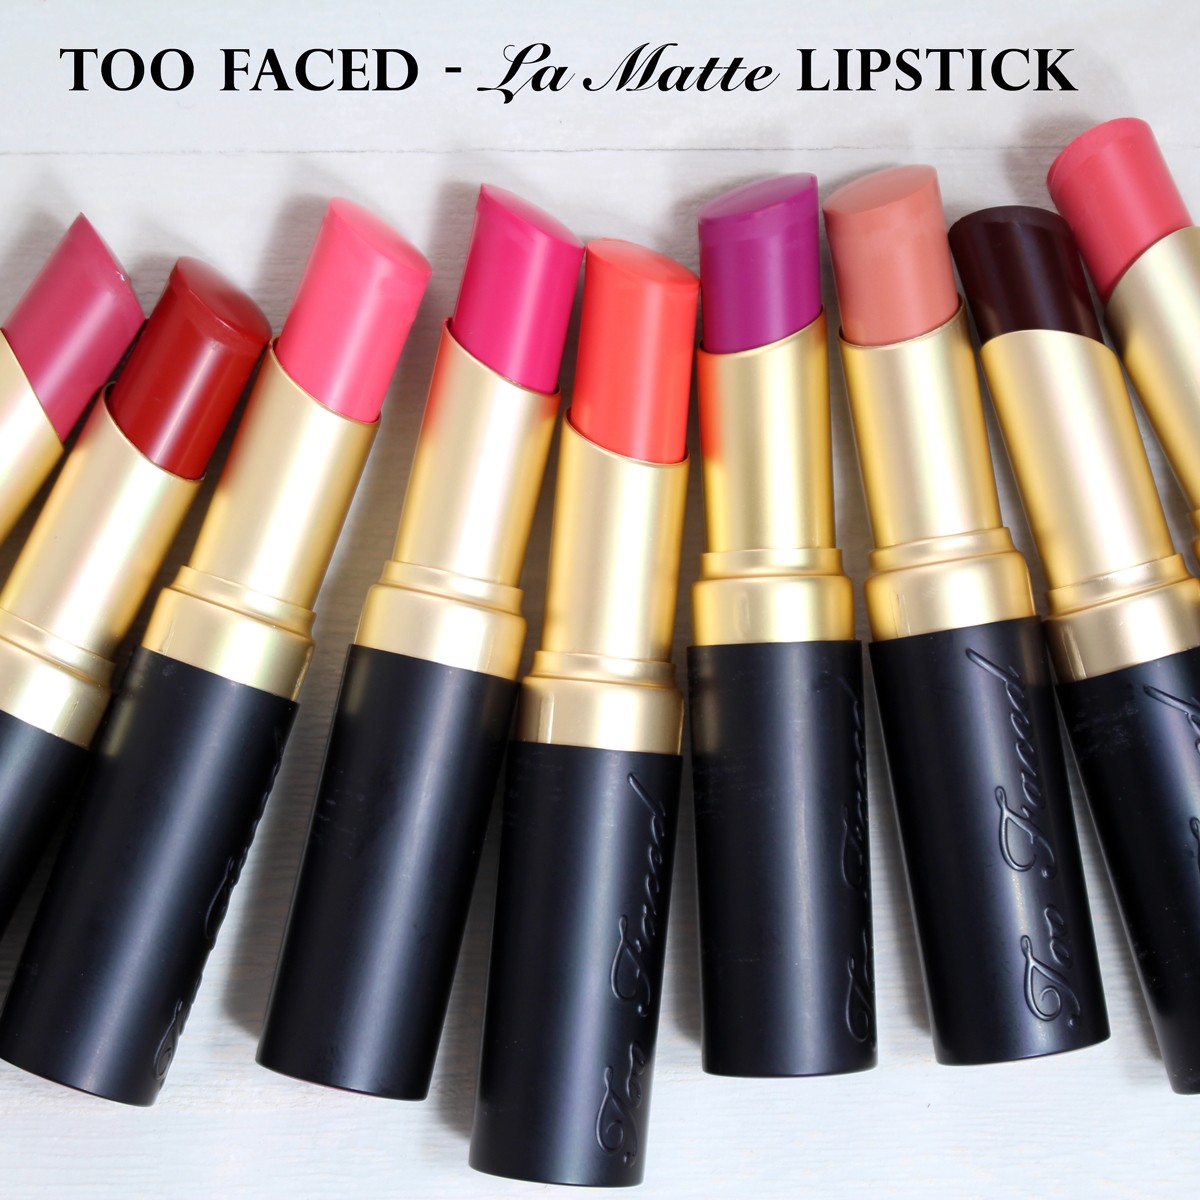 13 Best Matte Lipstick Brands in 2017 - Matte Lipsticks 